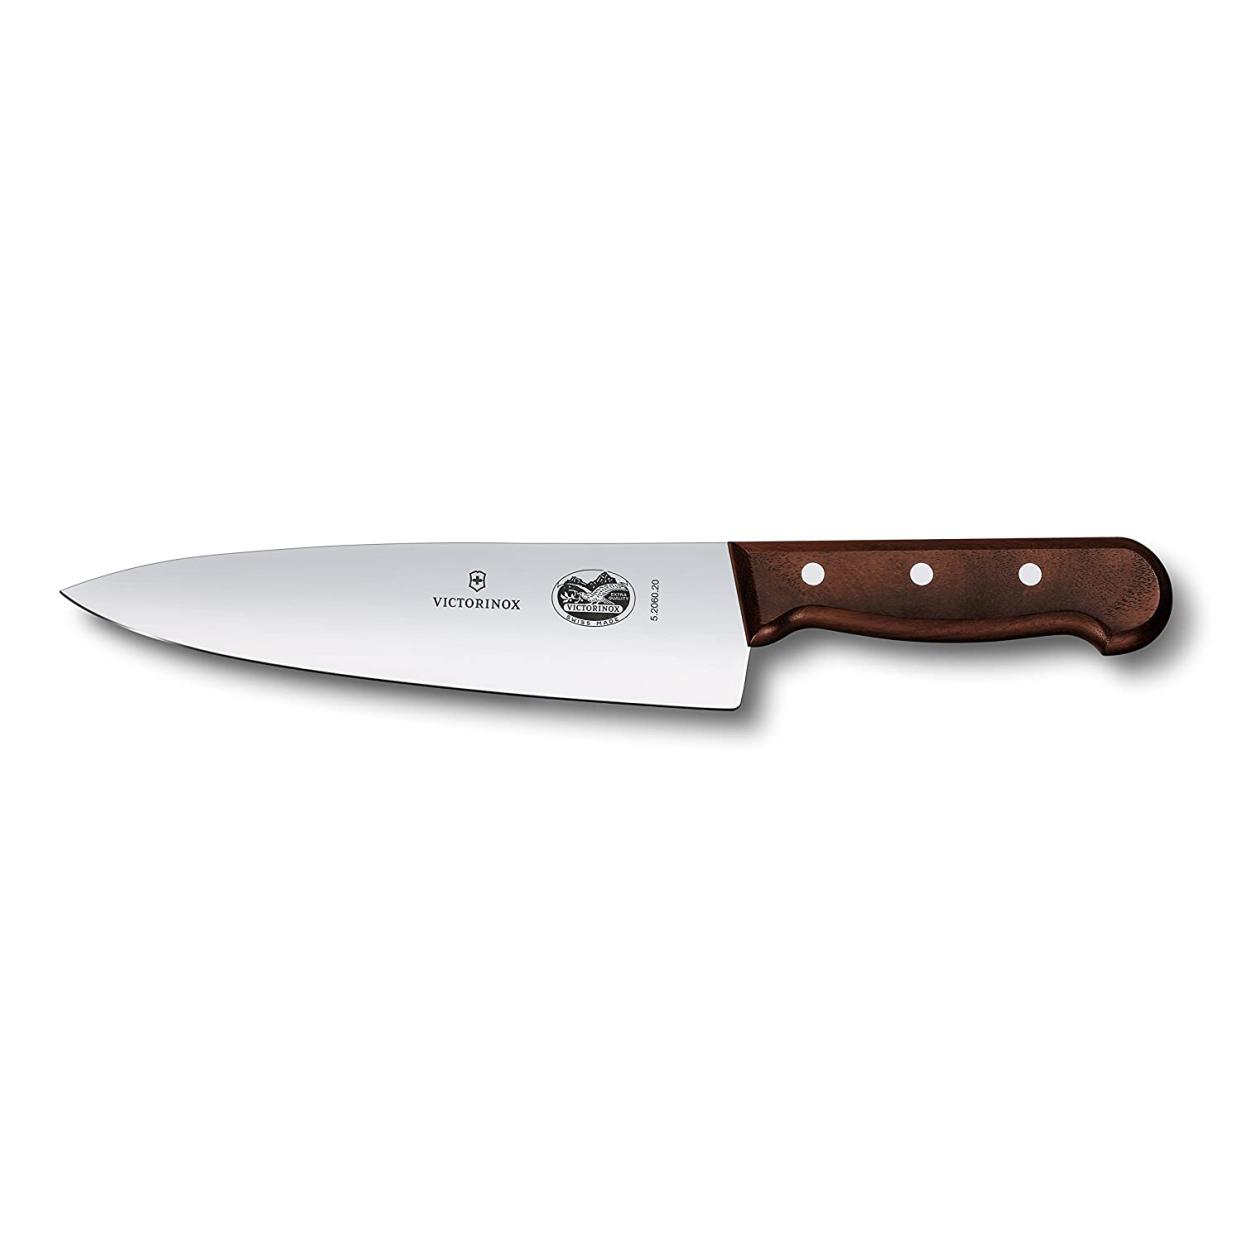 Victorinox swiss army chef's knife, best Amazon prime day kitchen deals